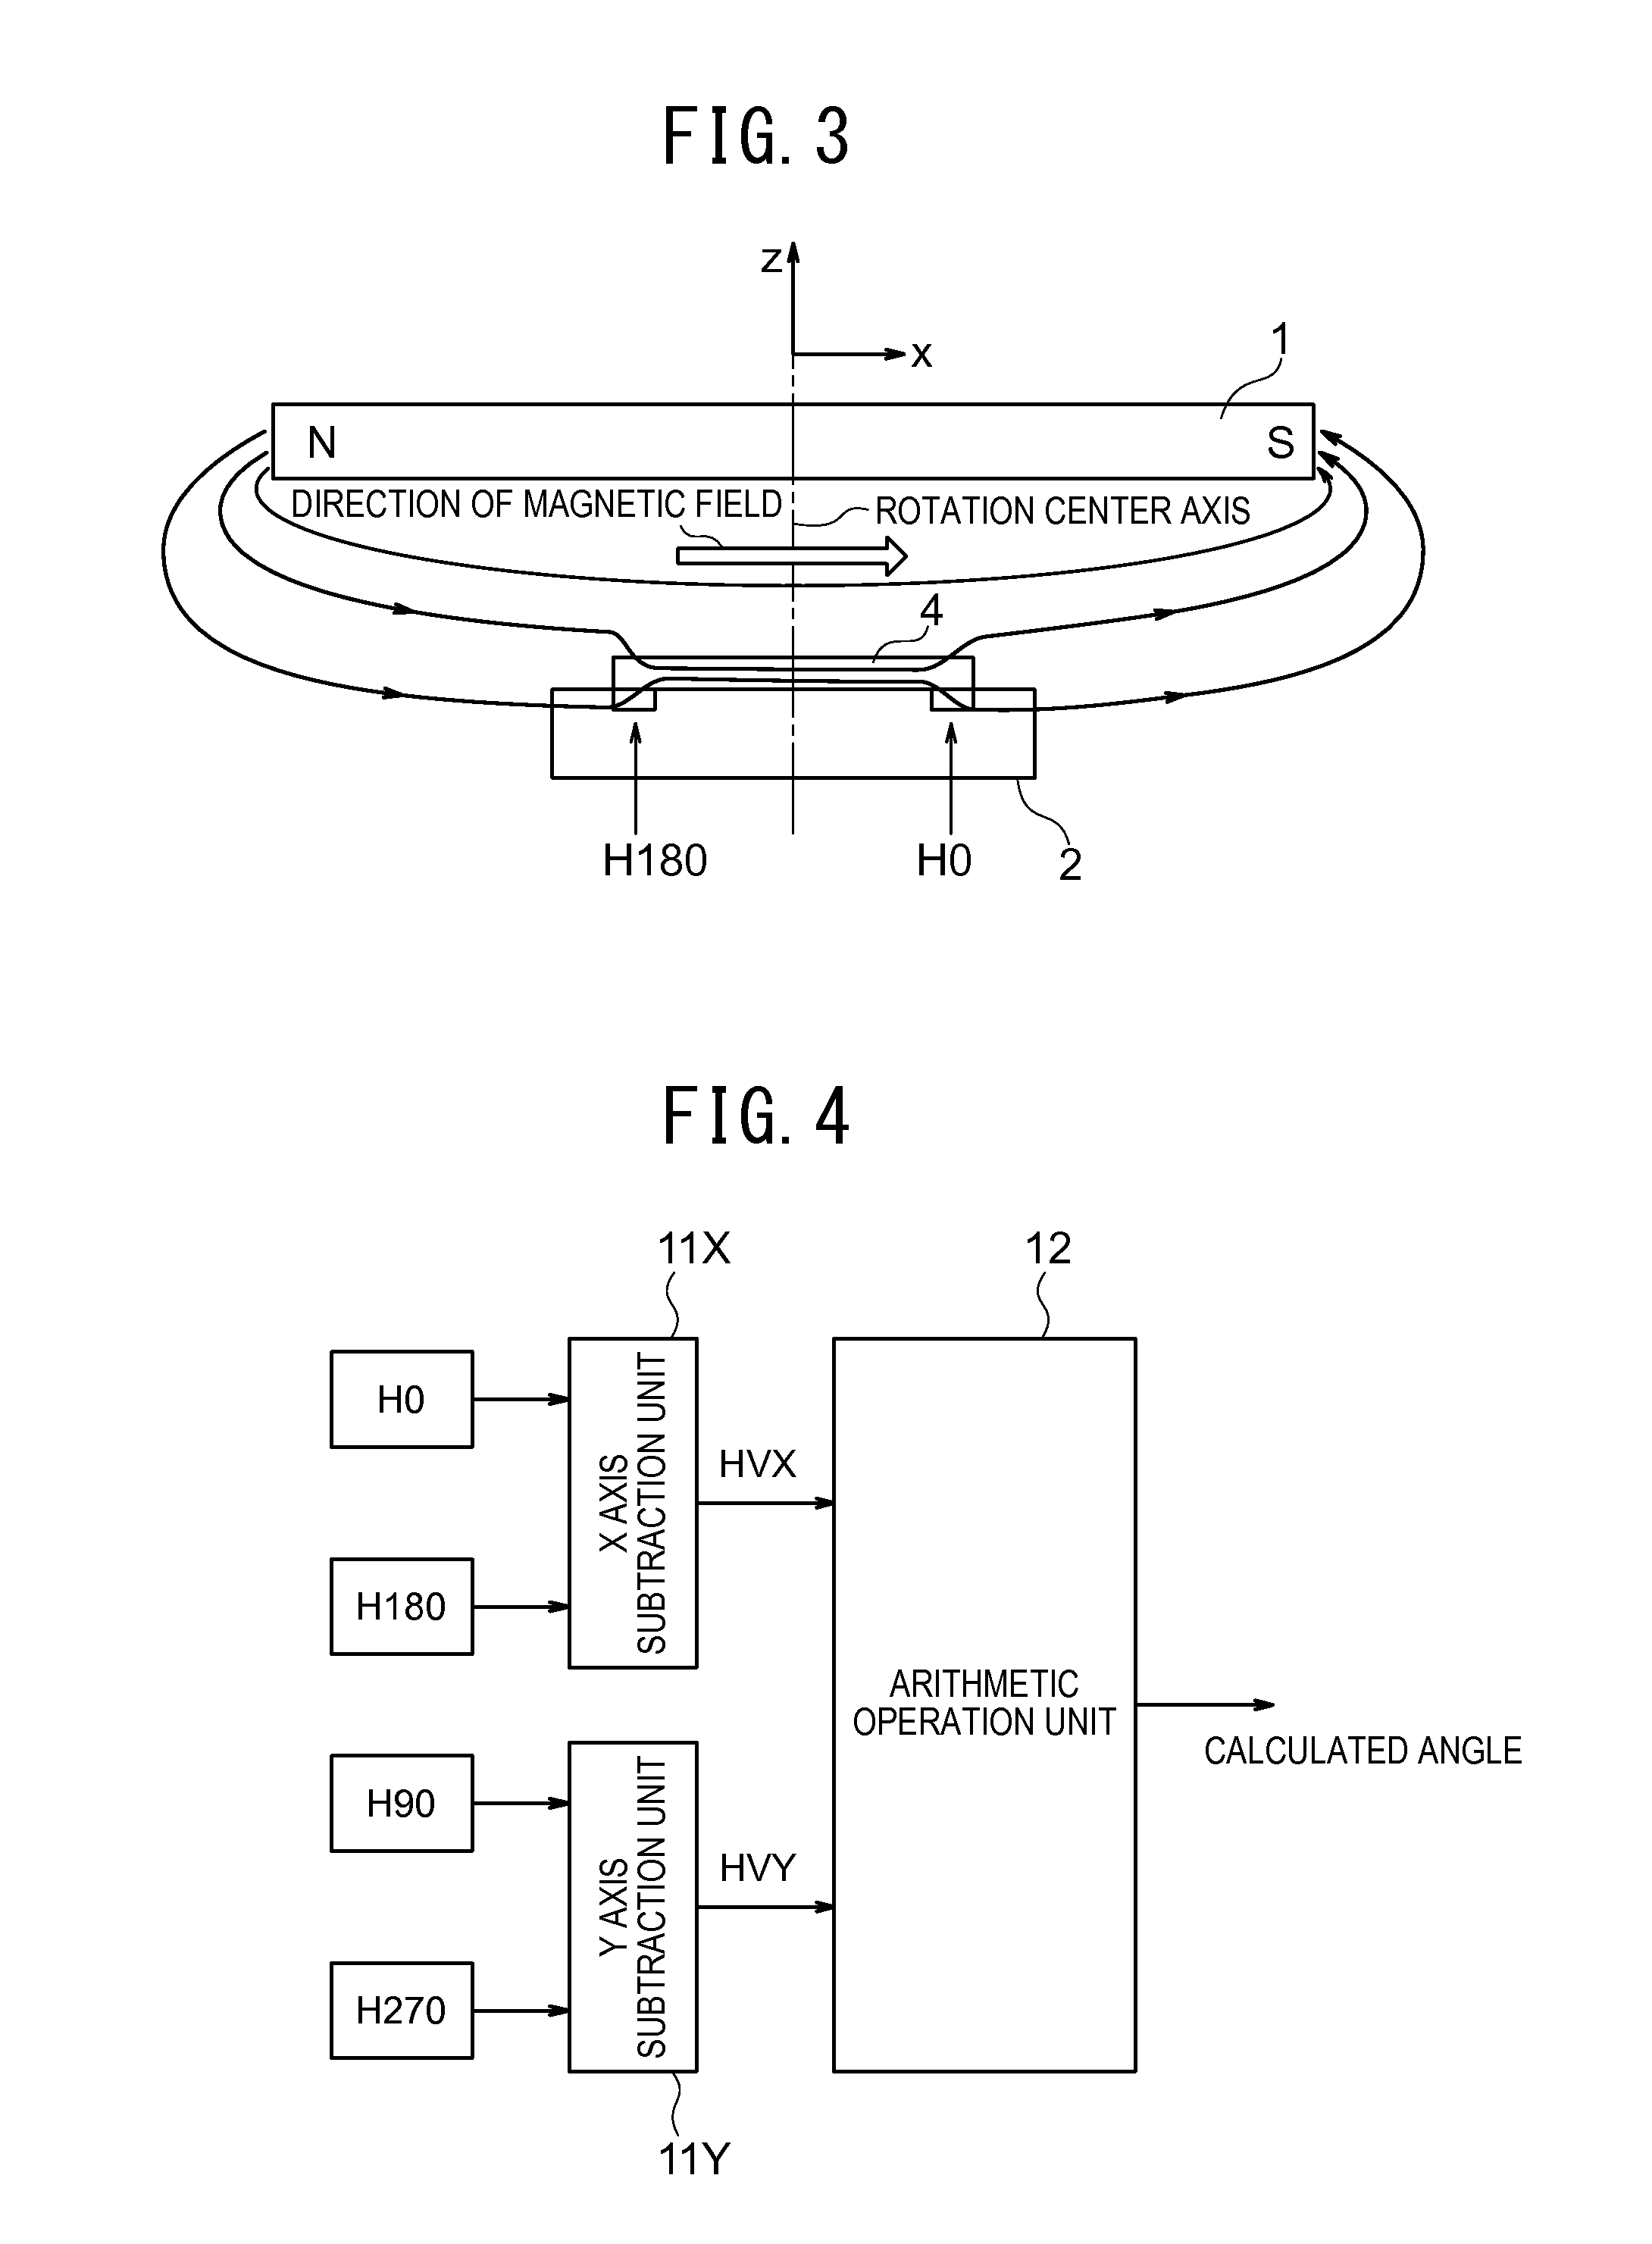 Rotation angle measurement apparatus